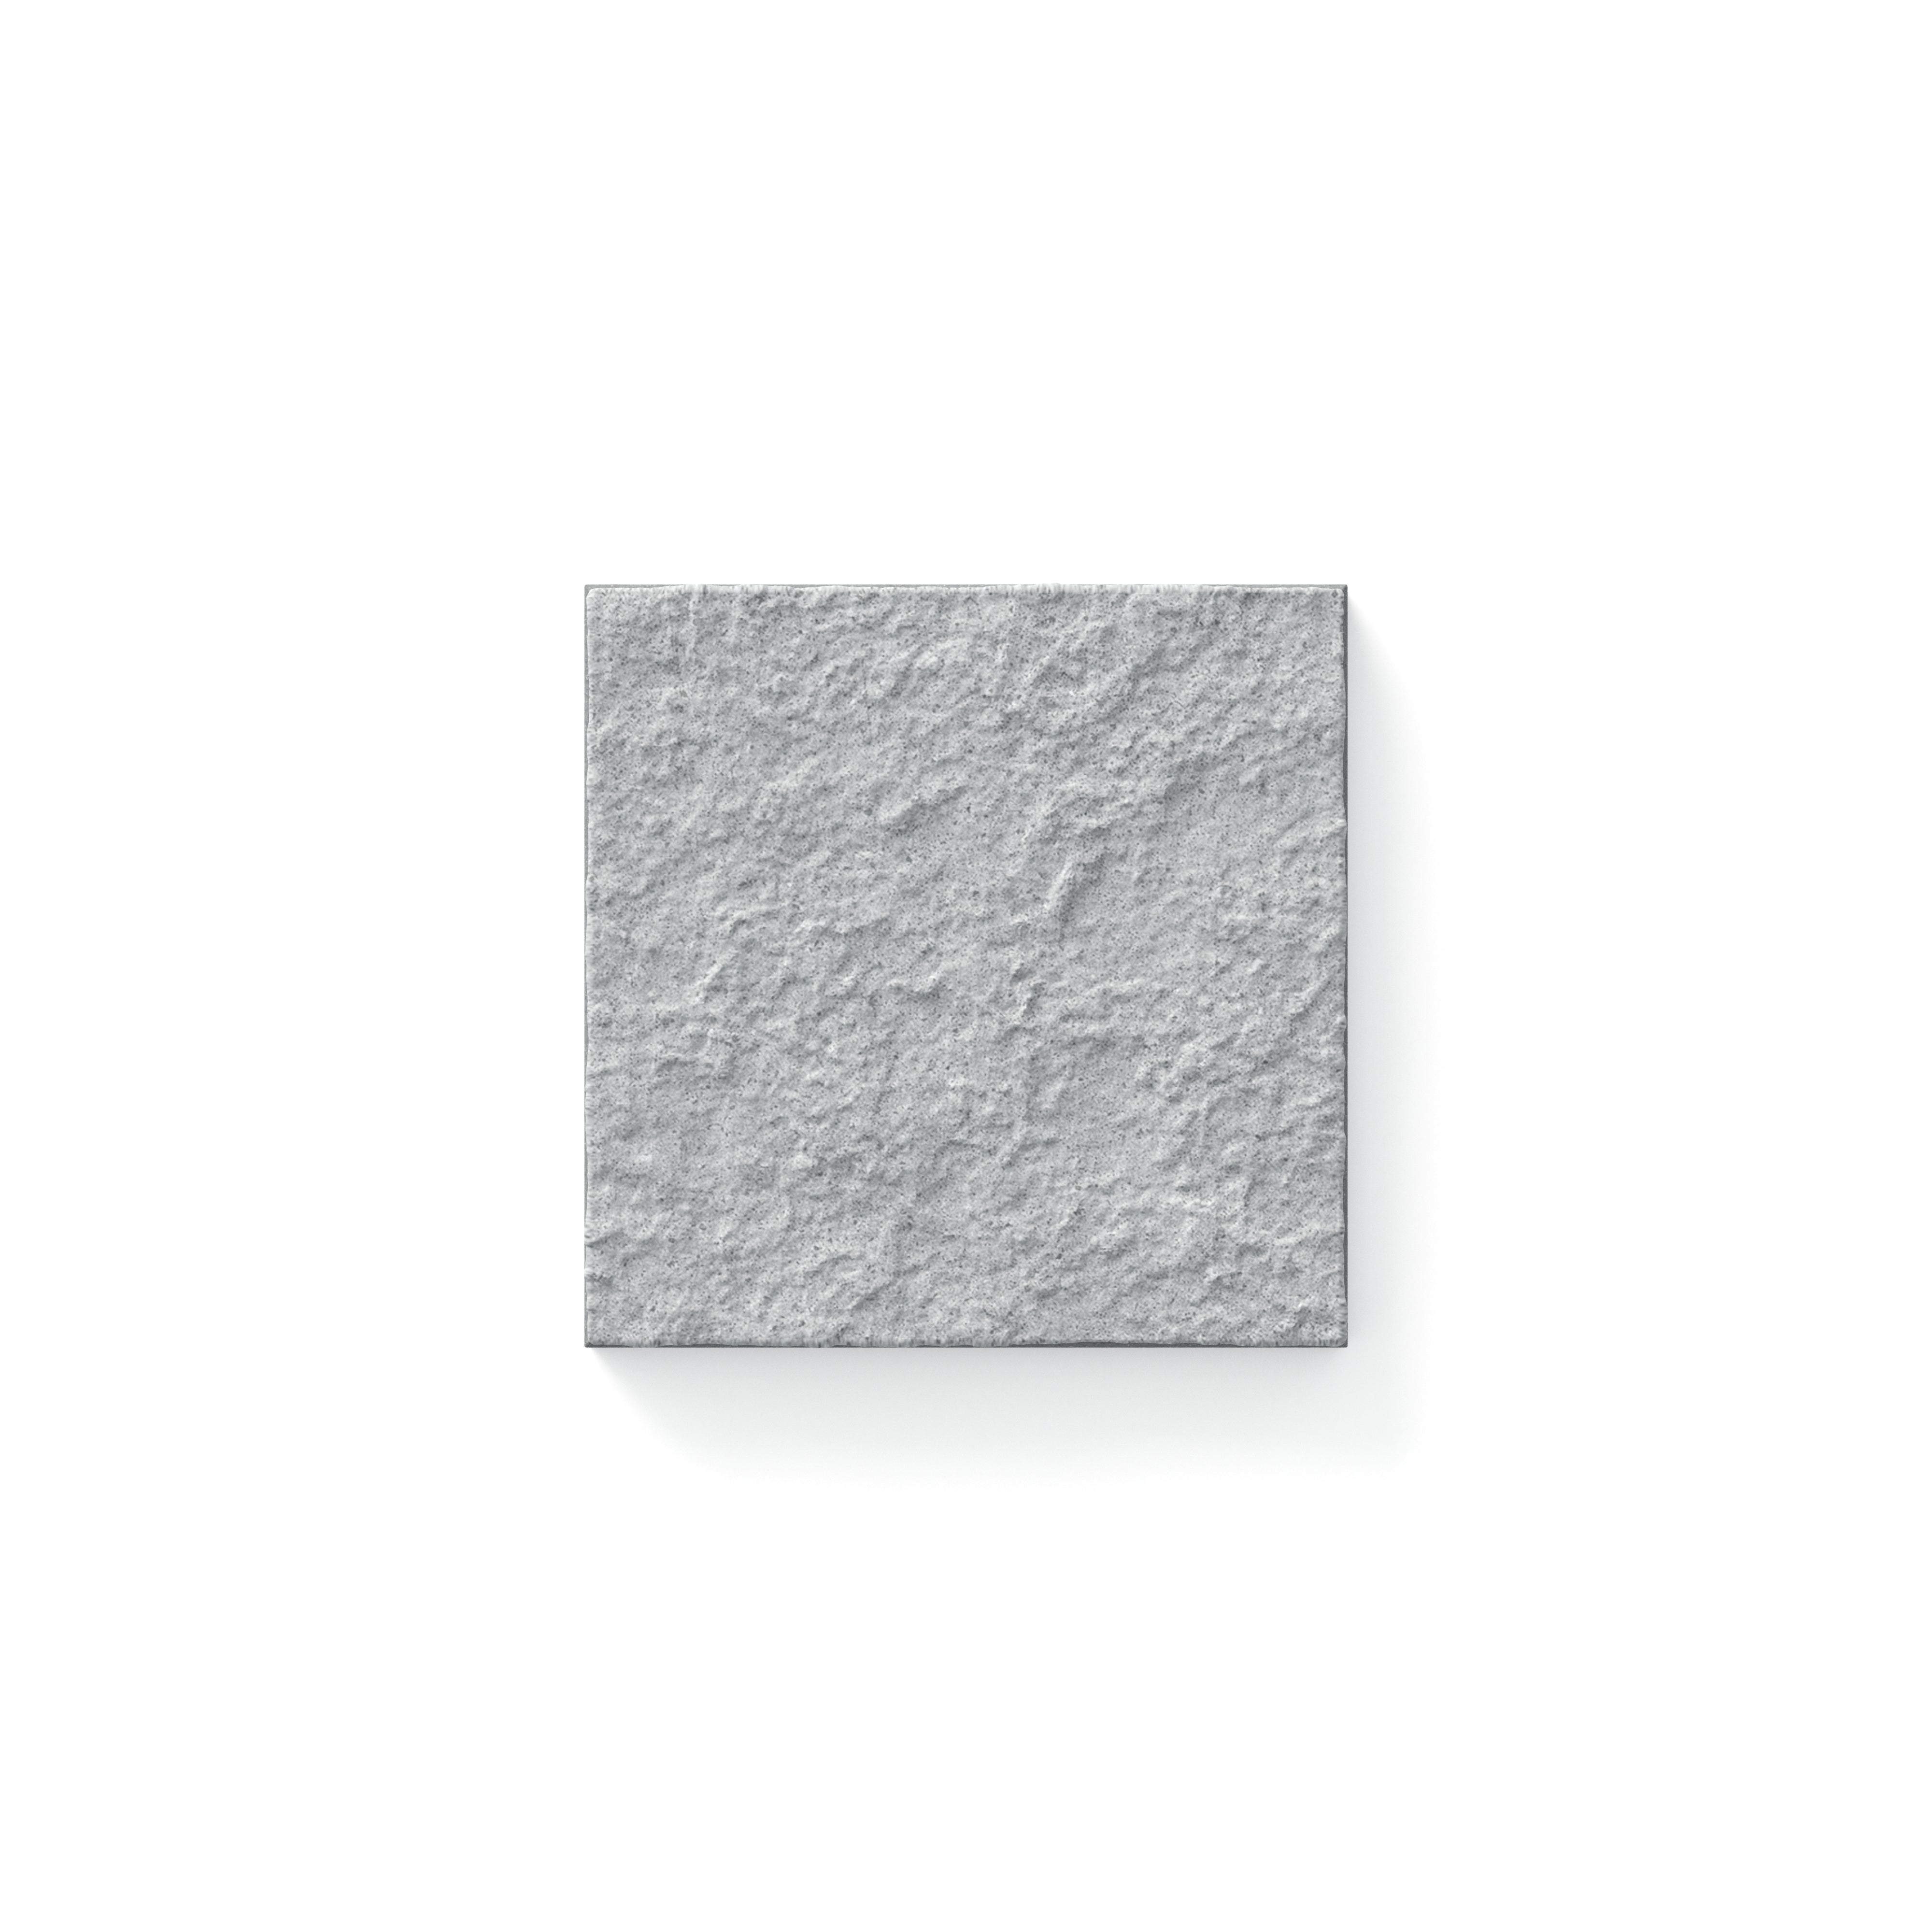 Palmer Raw Grey 4x4 Tile Sample